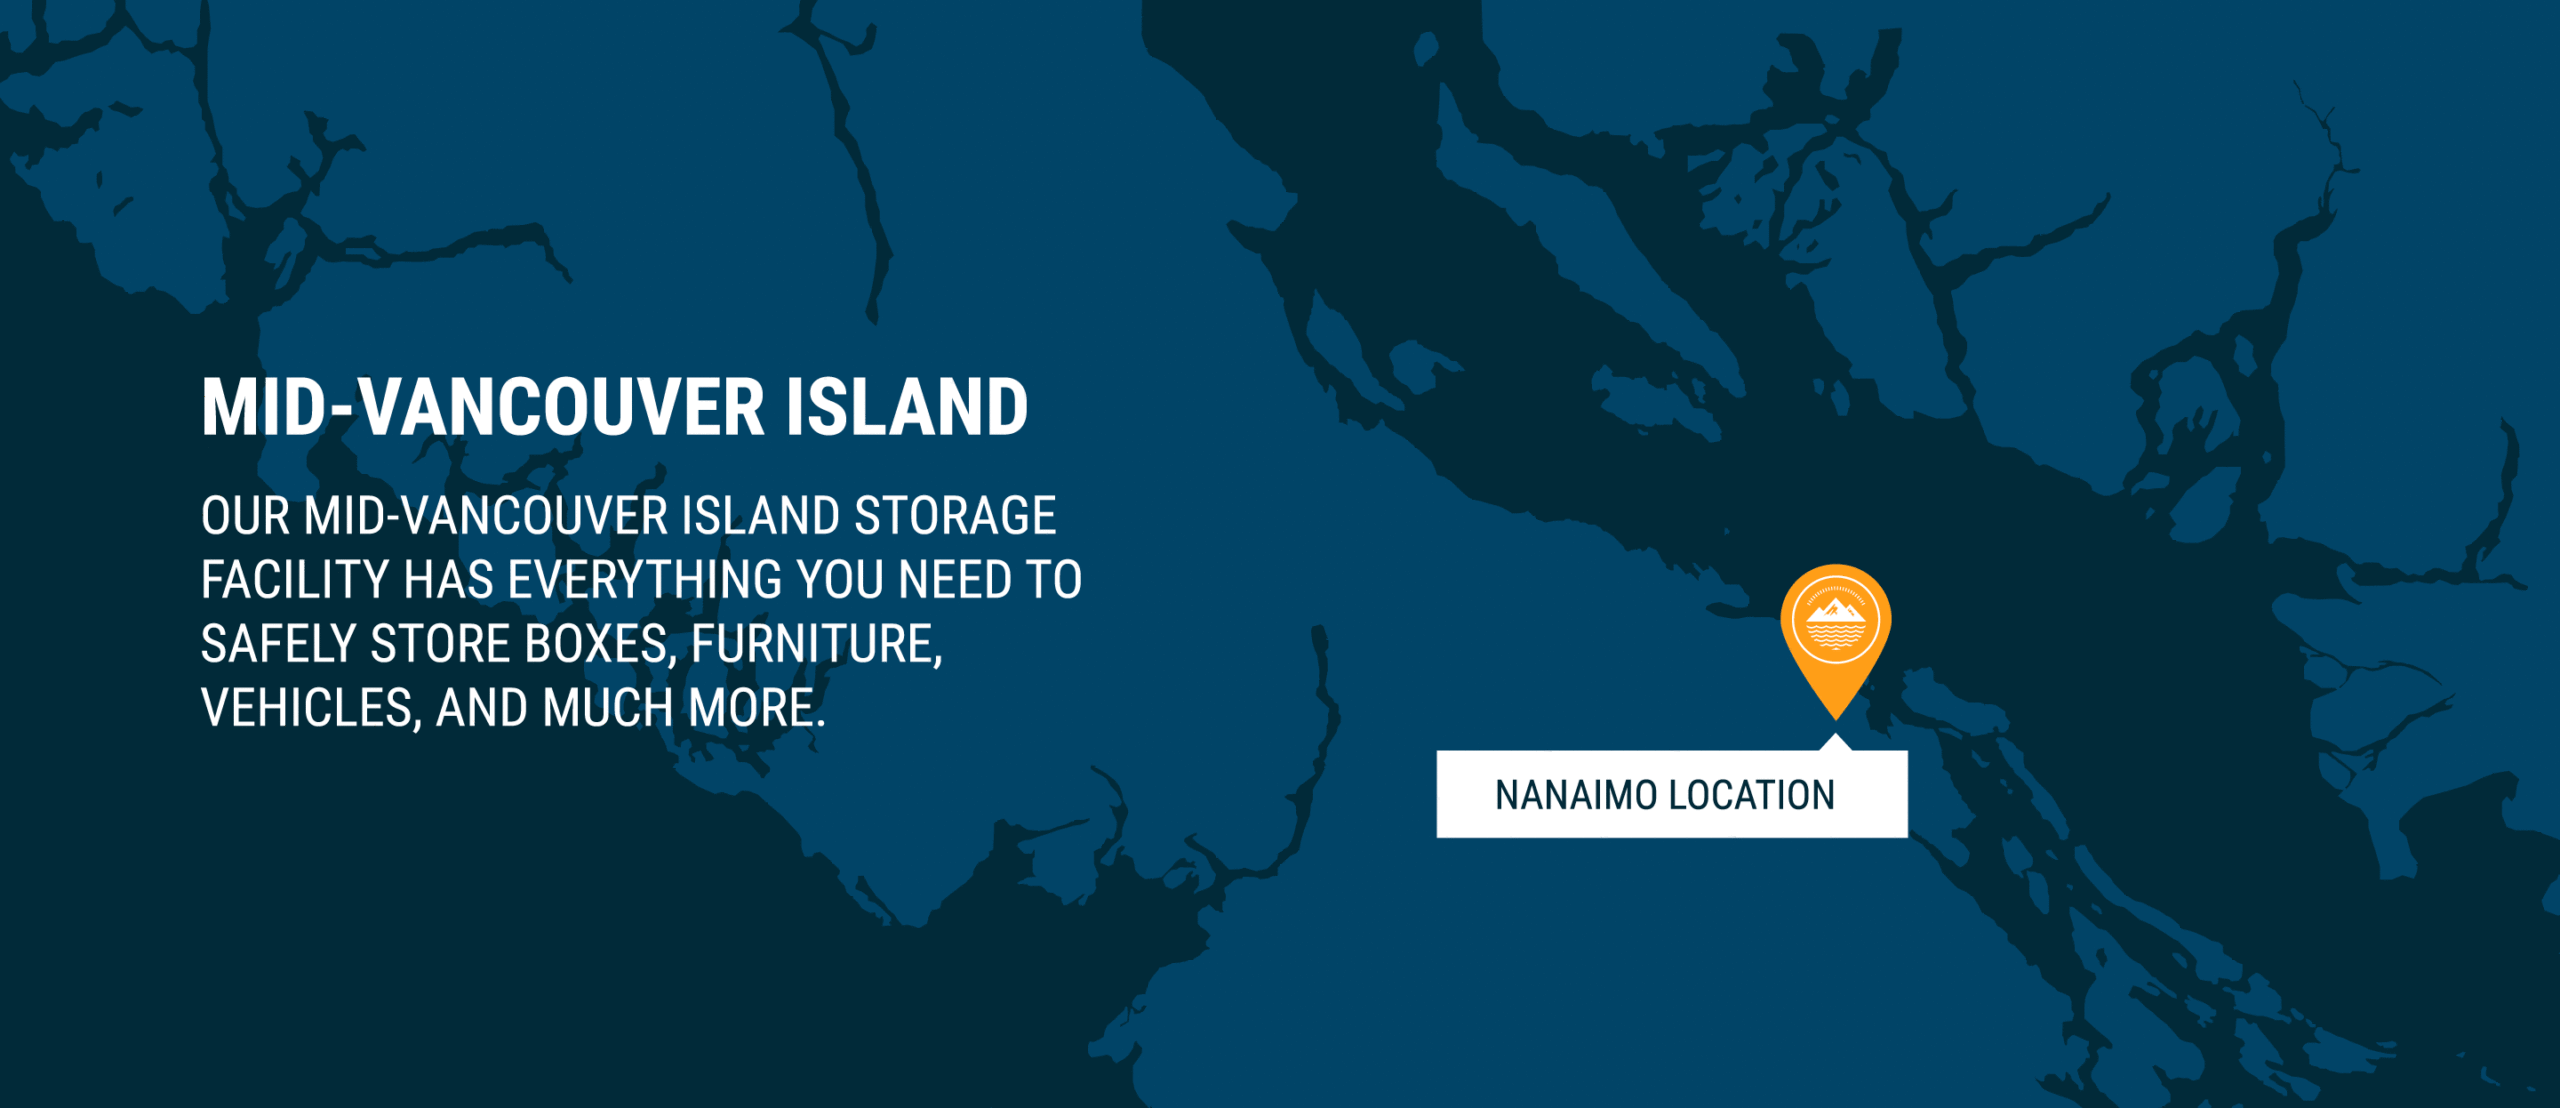 Pacific Rim Storage Mid-Vancouver Island locations